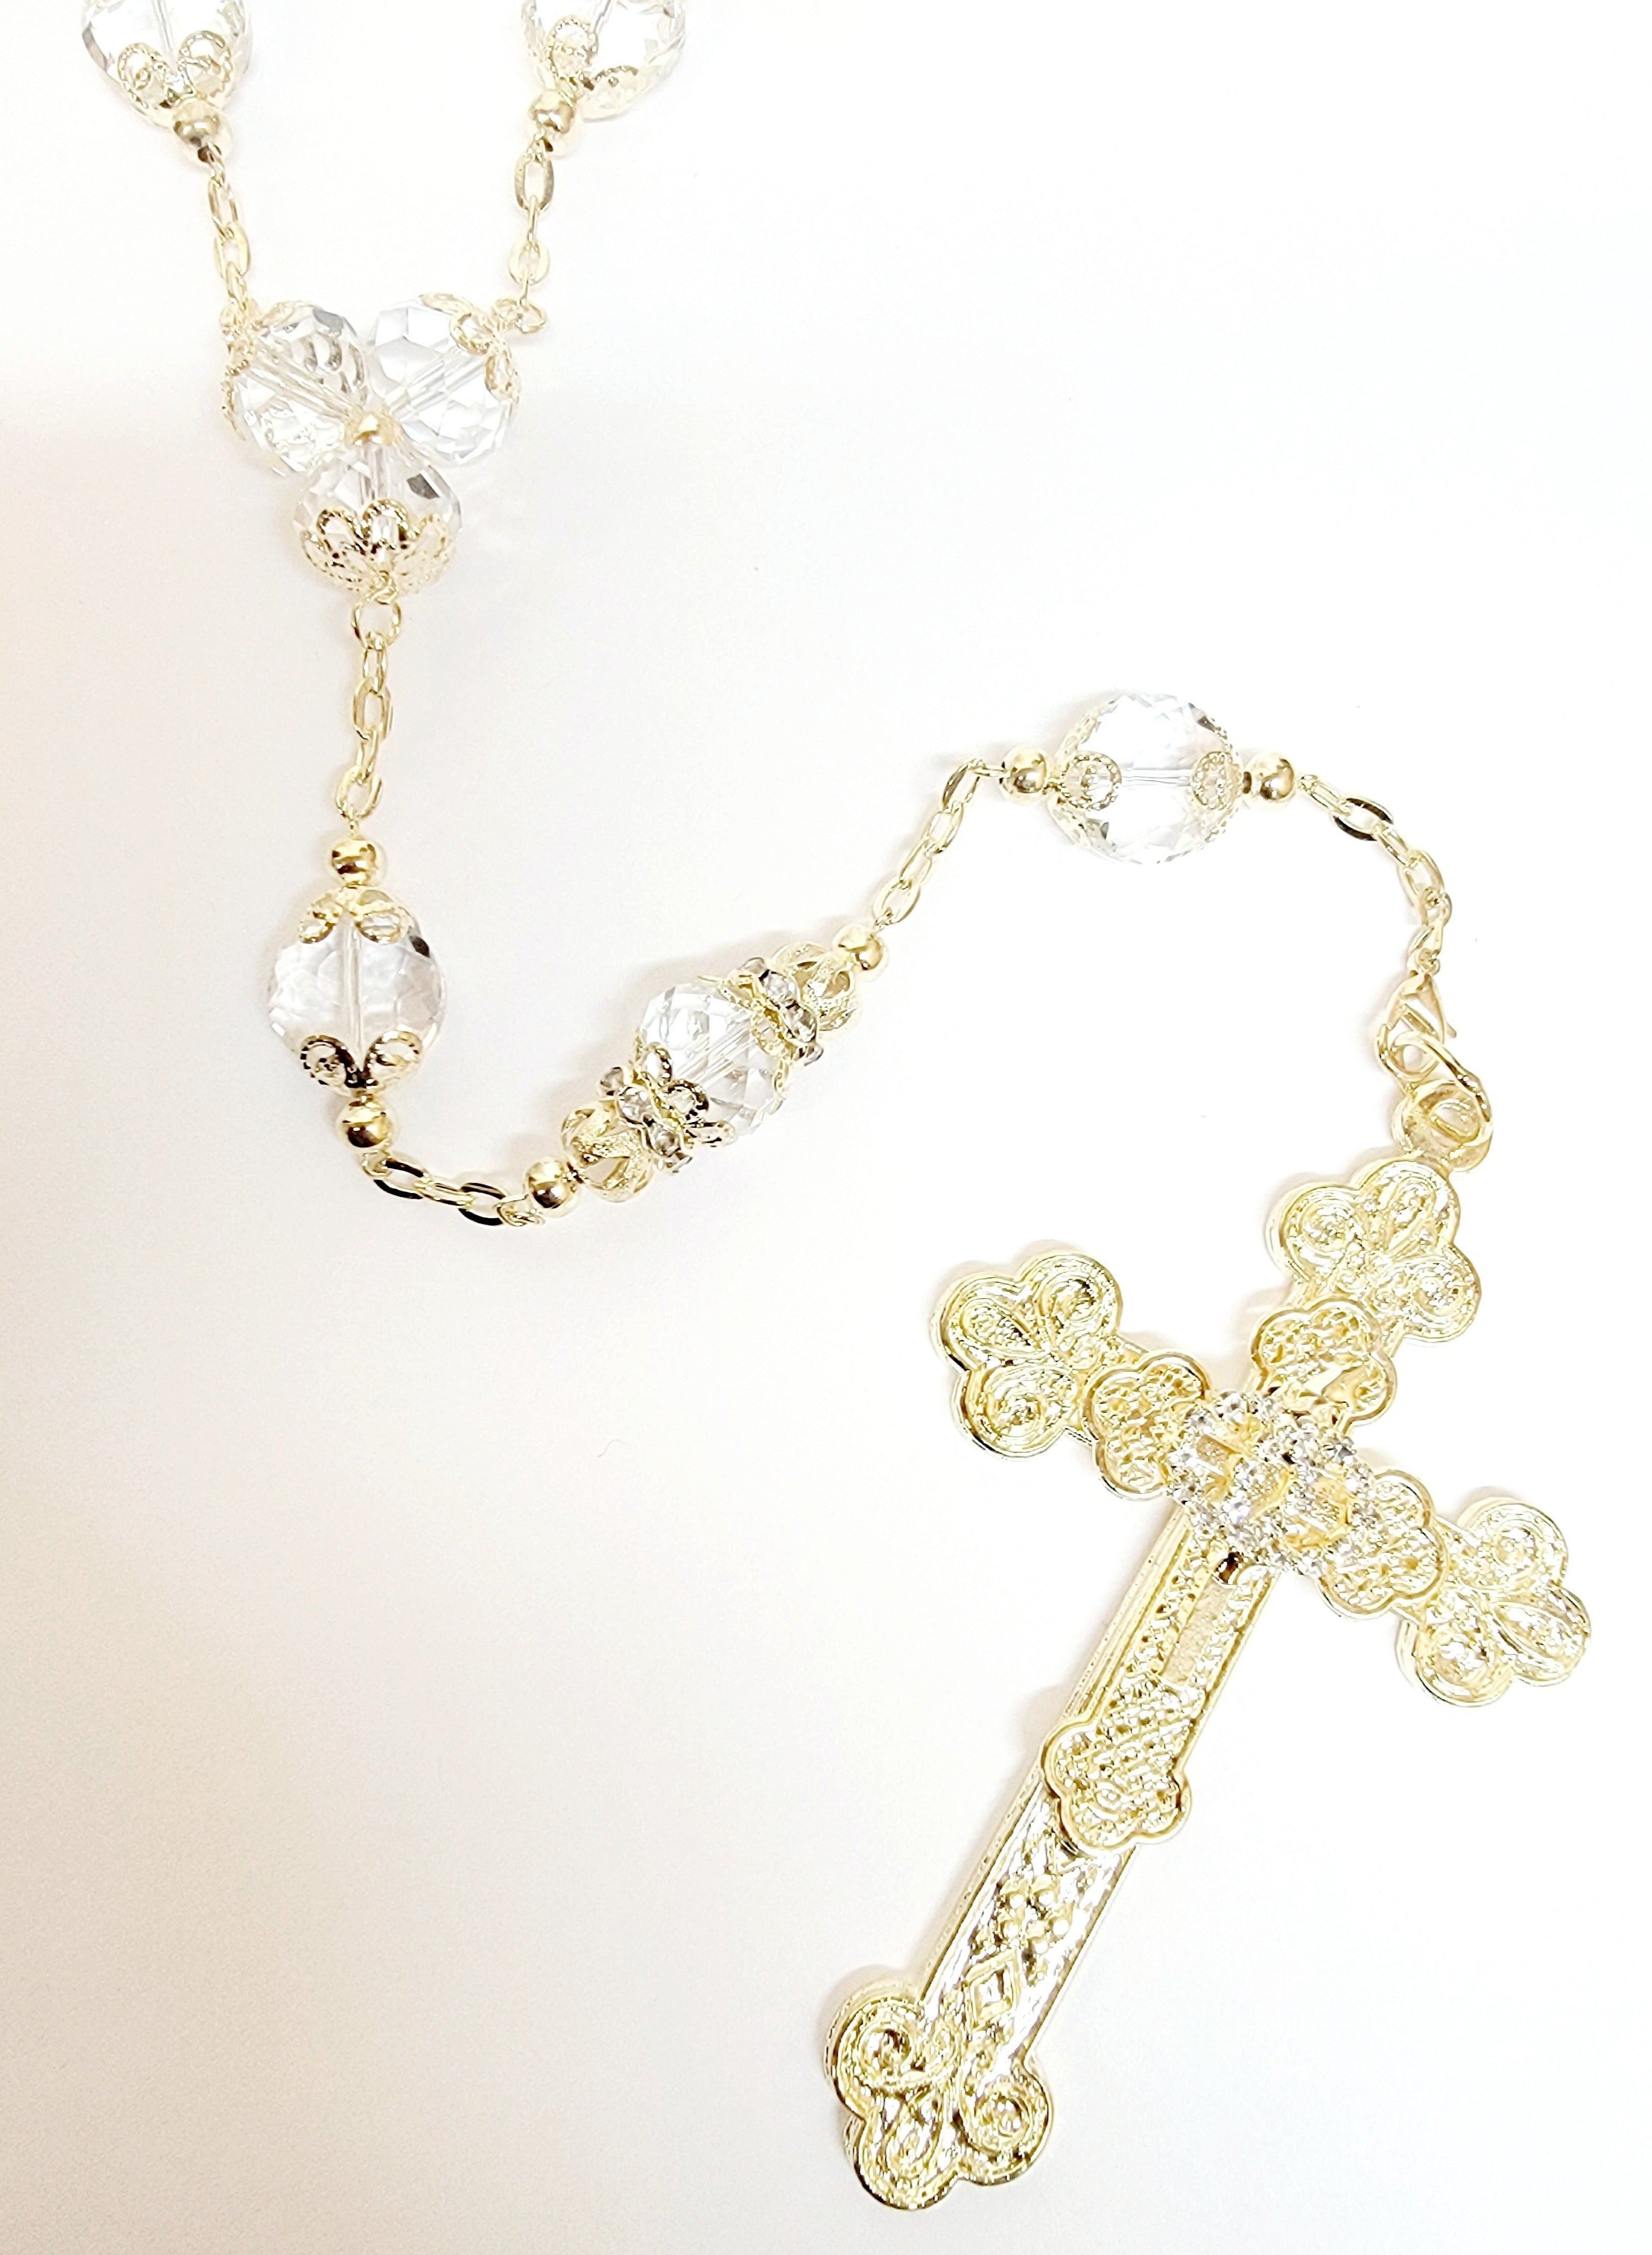 Gold Crystal Bead Rosary Wedding Lasso